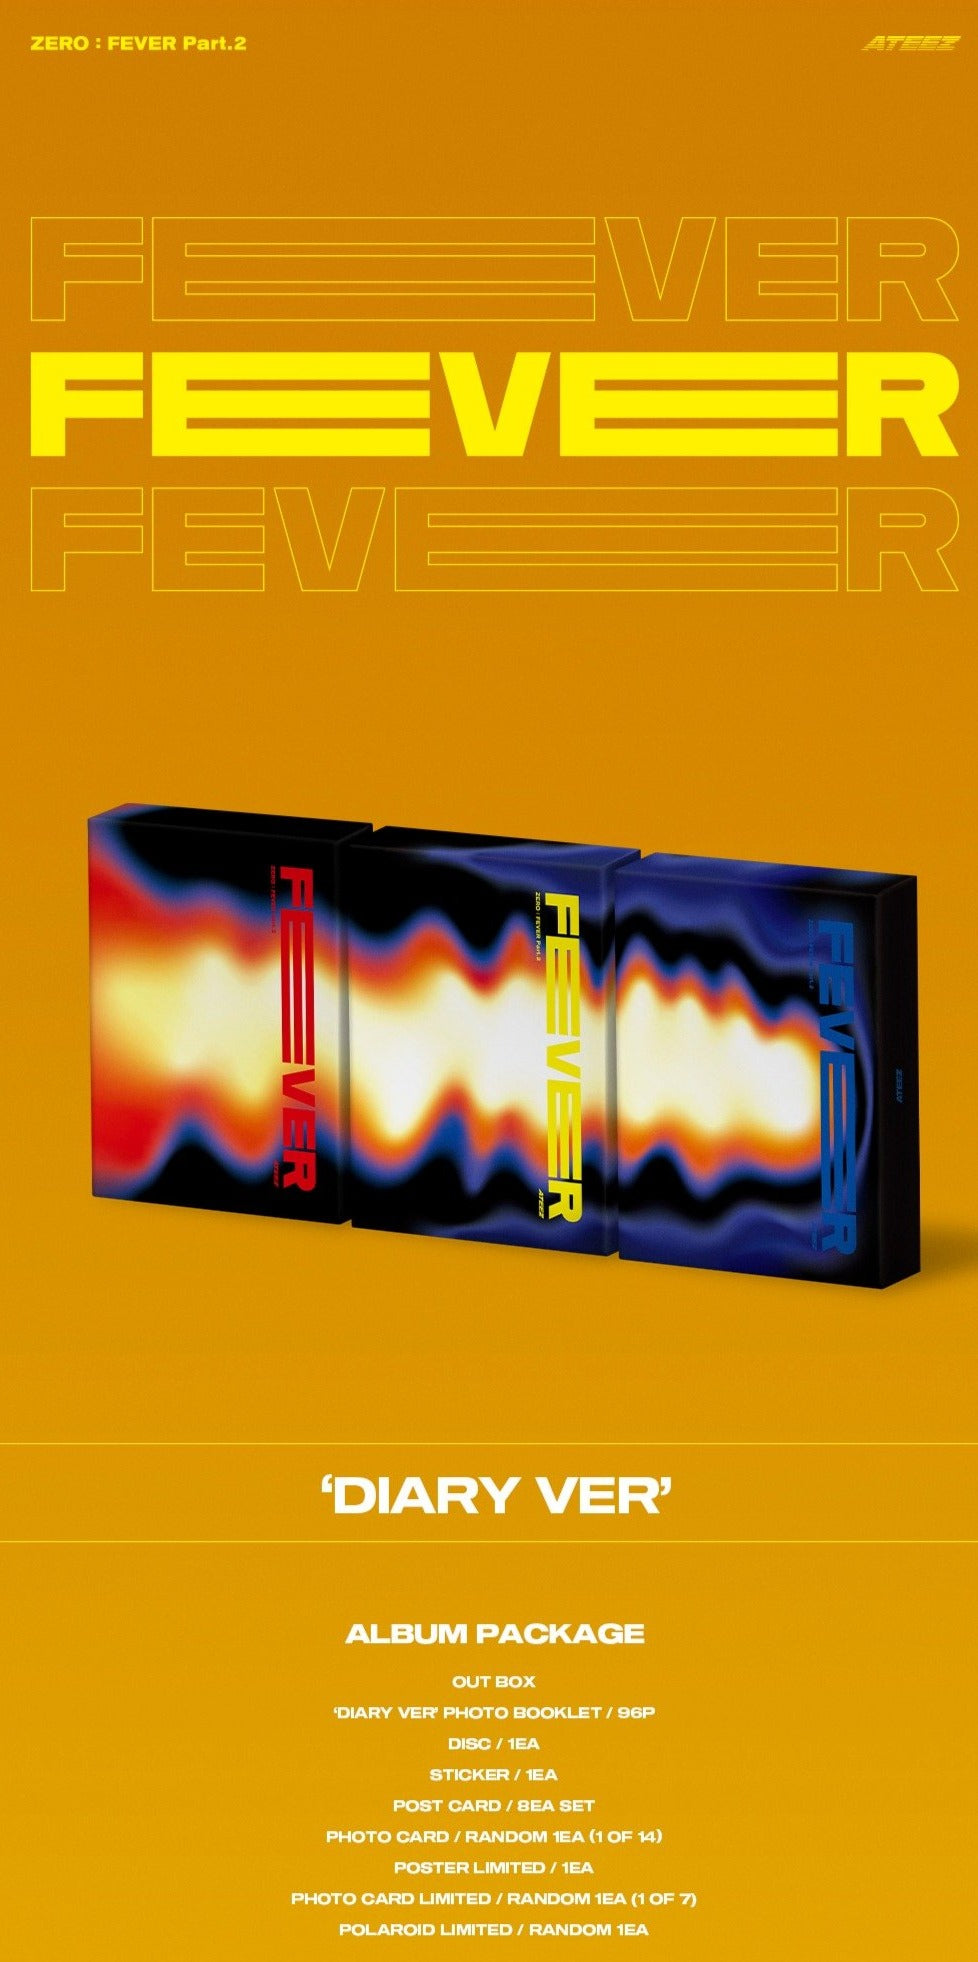 ATEEZ - 5th Mini Album [ZERO : FEVER Part.1] Official Poster: Type A